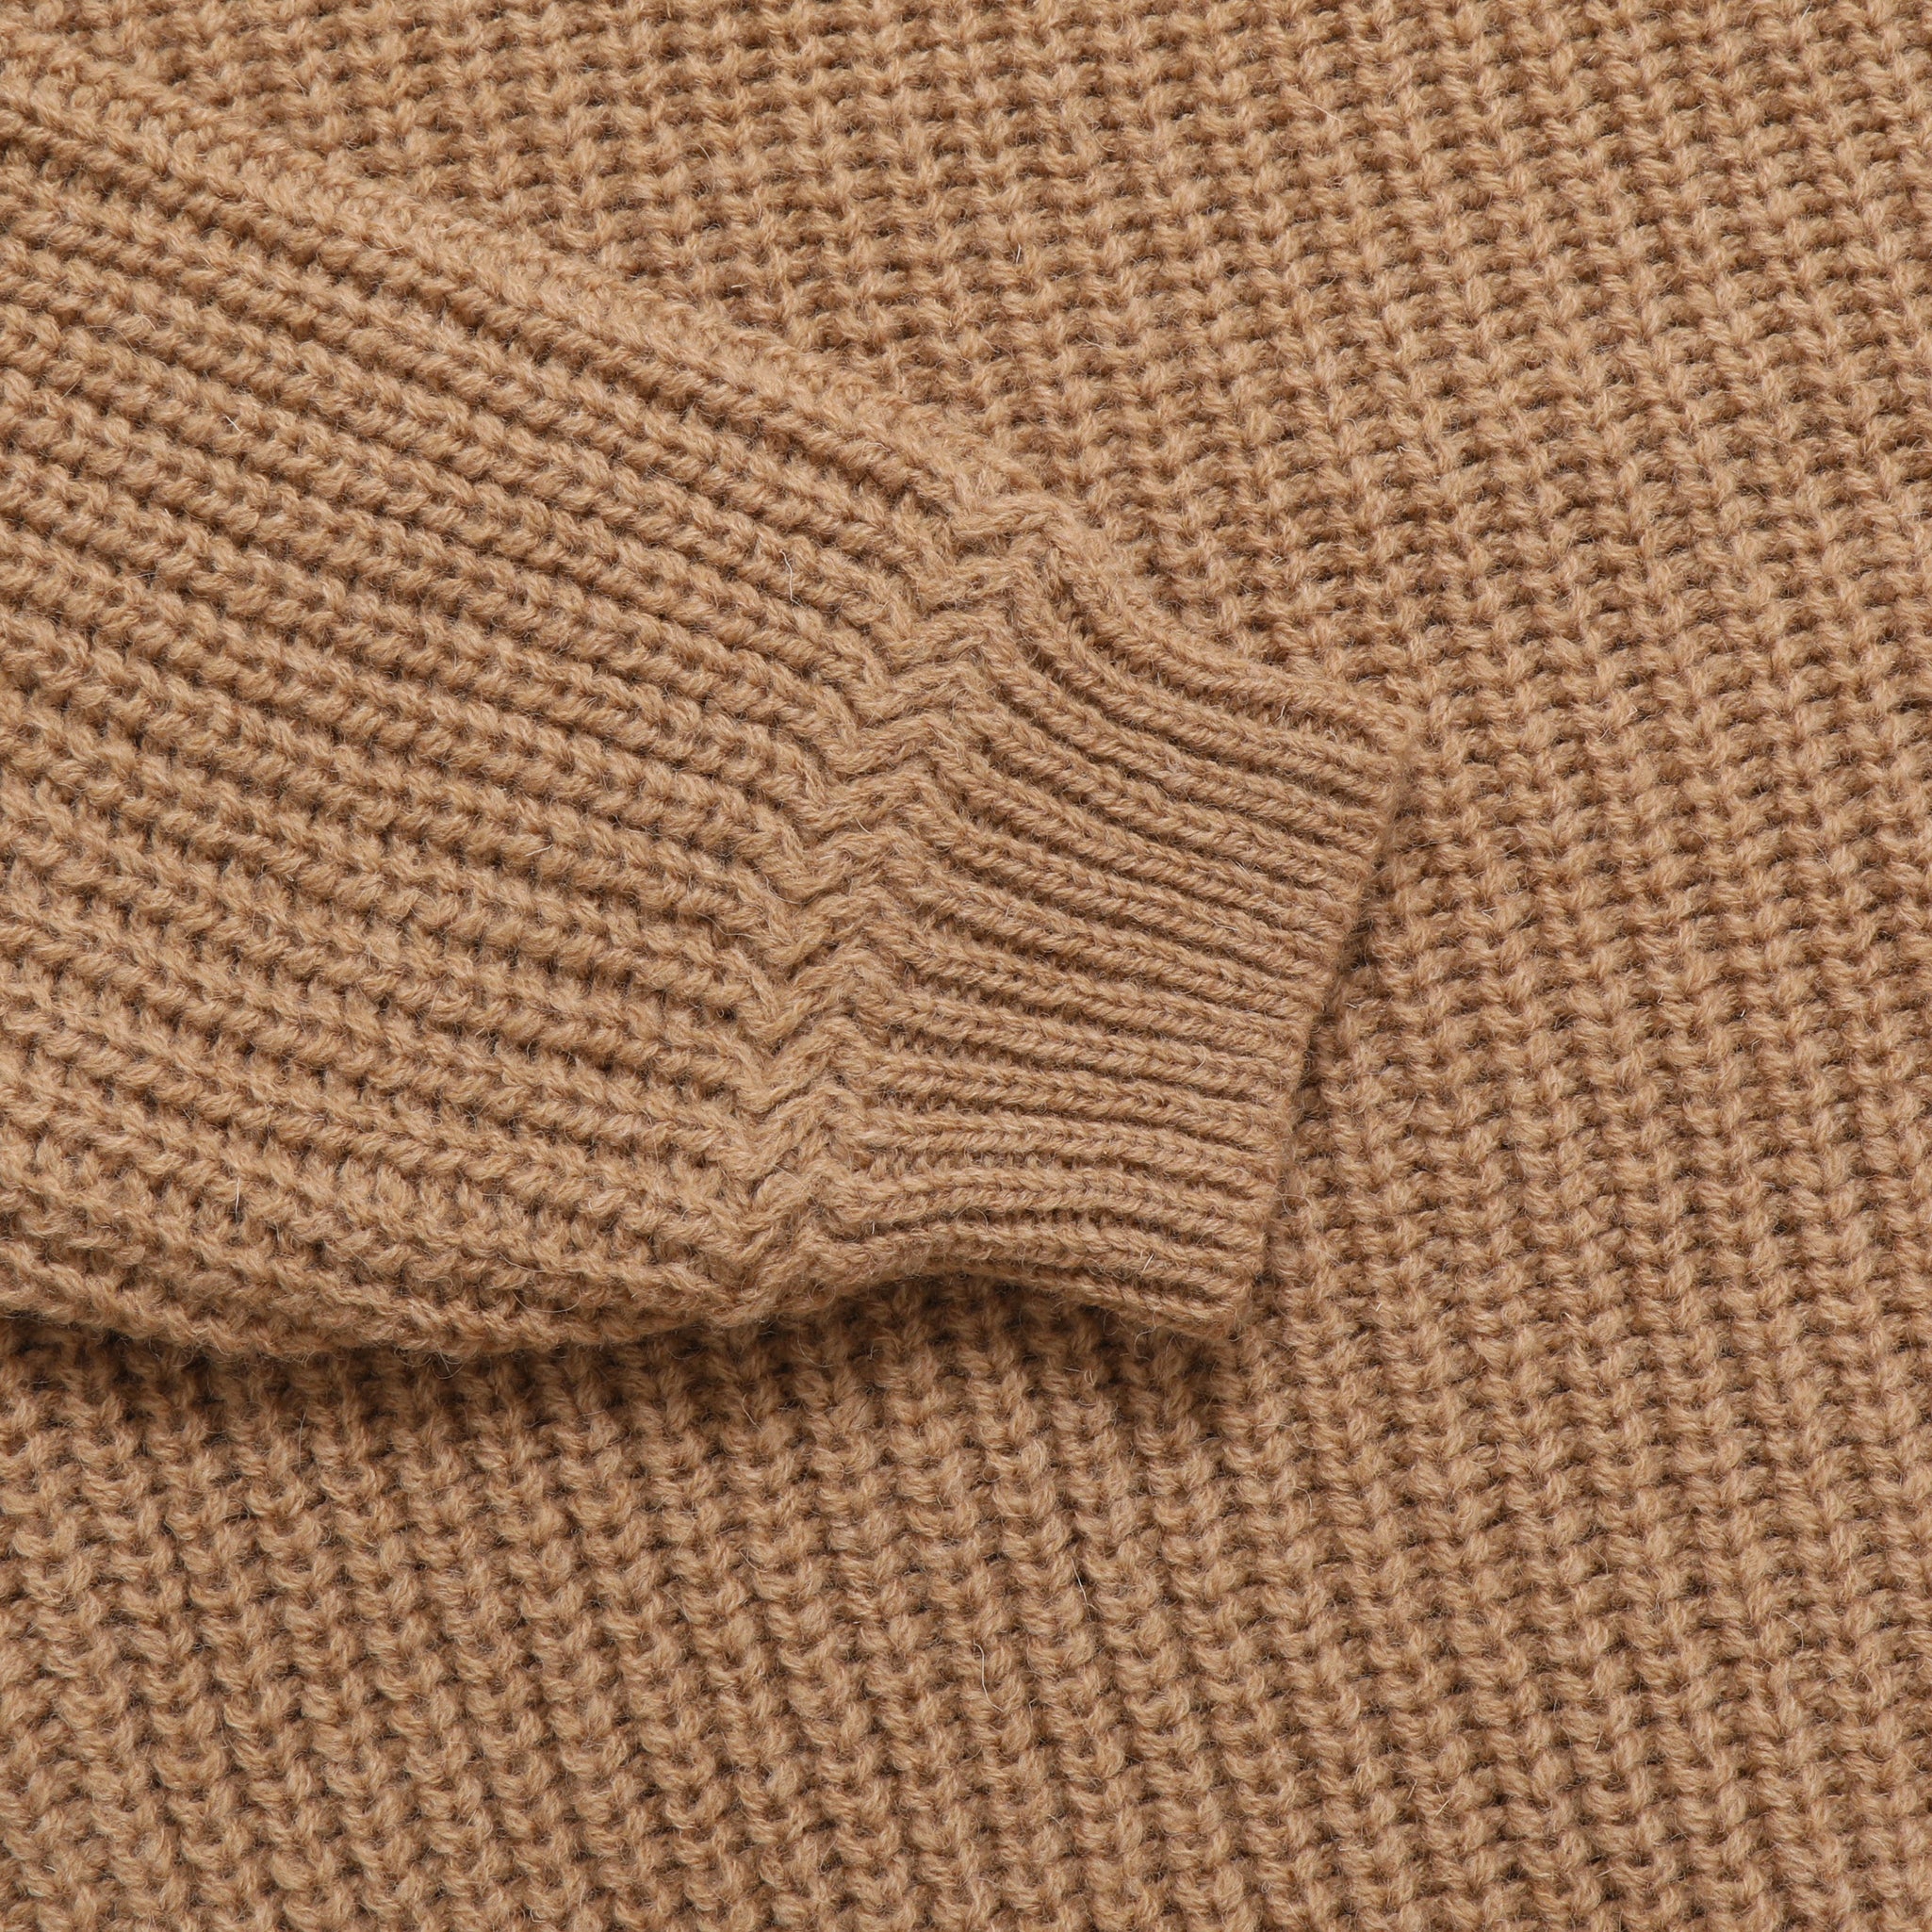 Fisherman Sweater - Camel